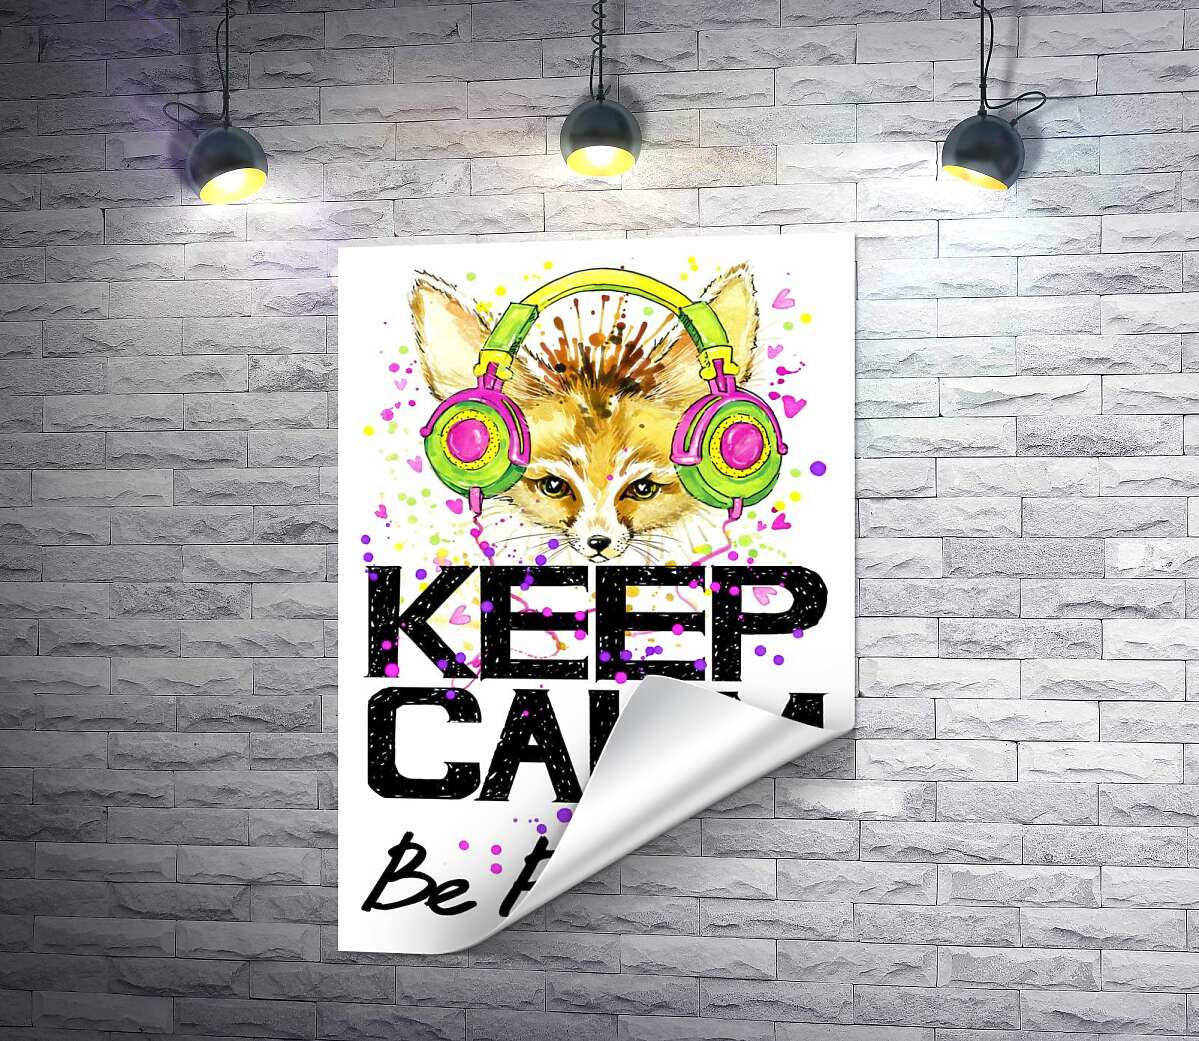 друк Лисиця фенек в яскравих навушниках над написом "keep calm and be positive"